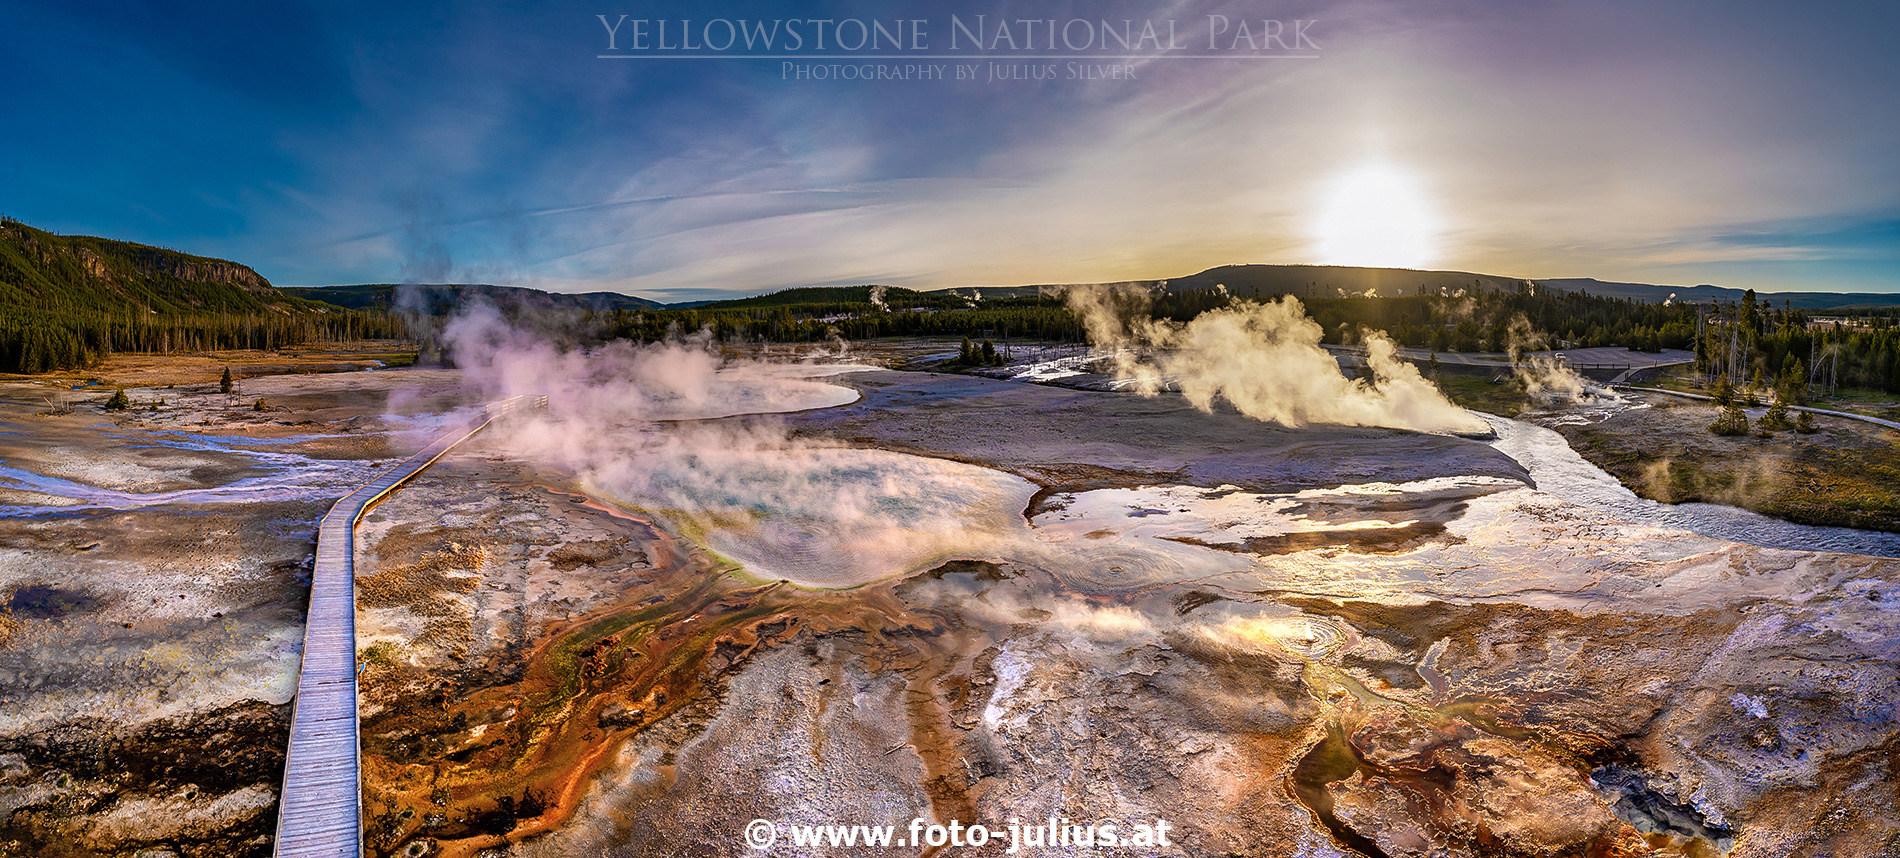 443a_Yellowstone_National_Park.jpg, 978kB